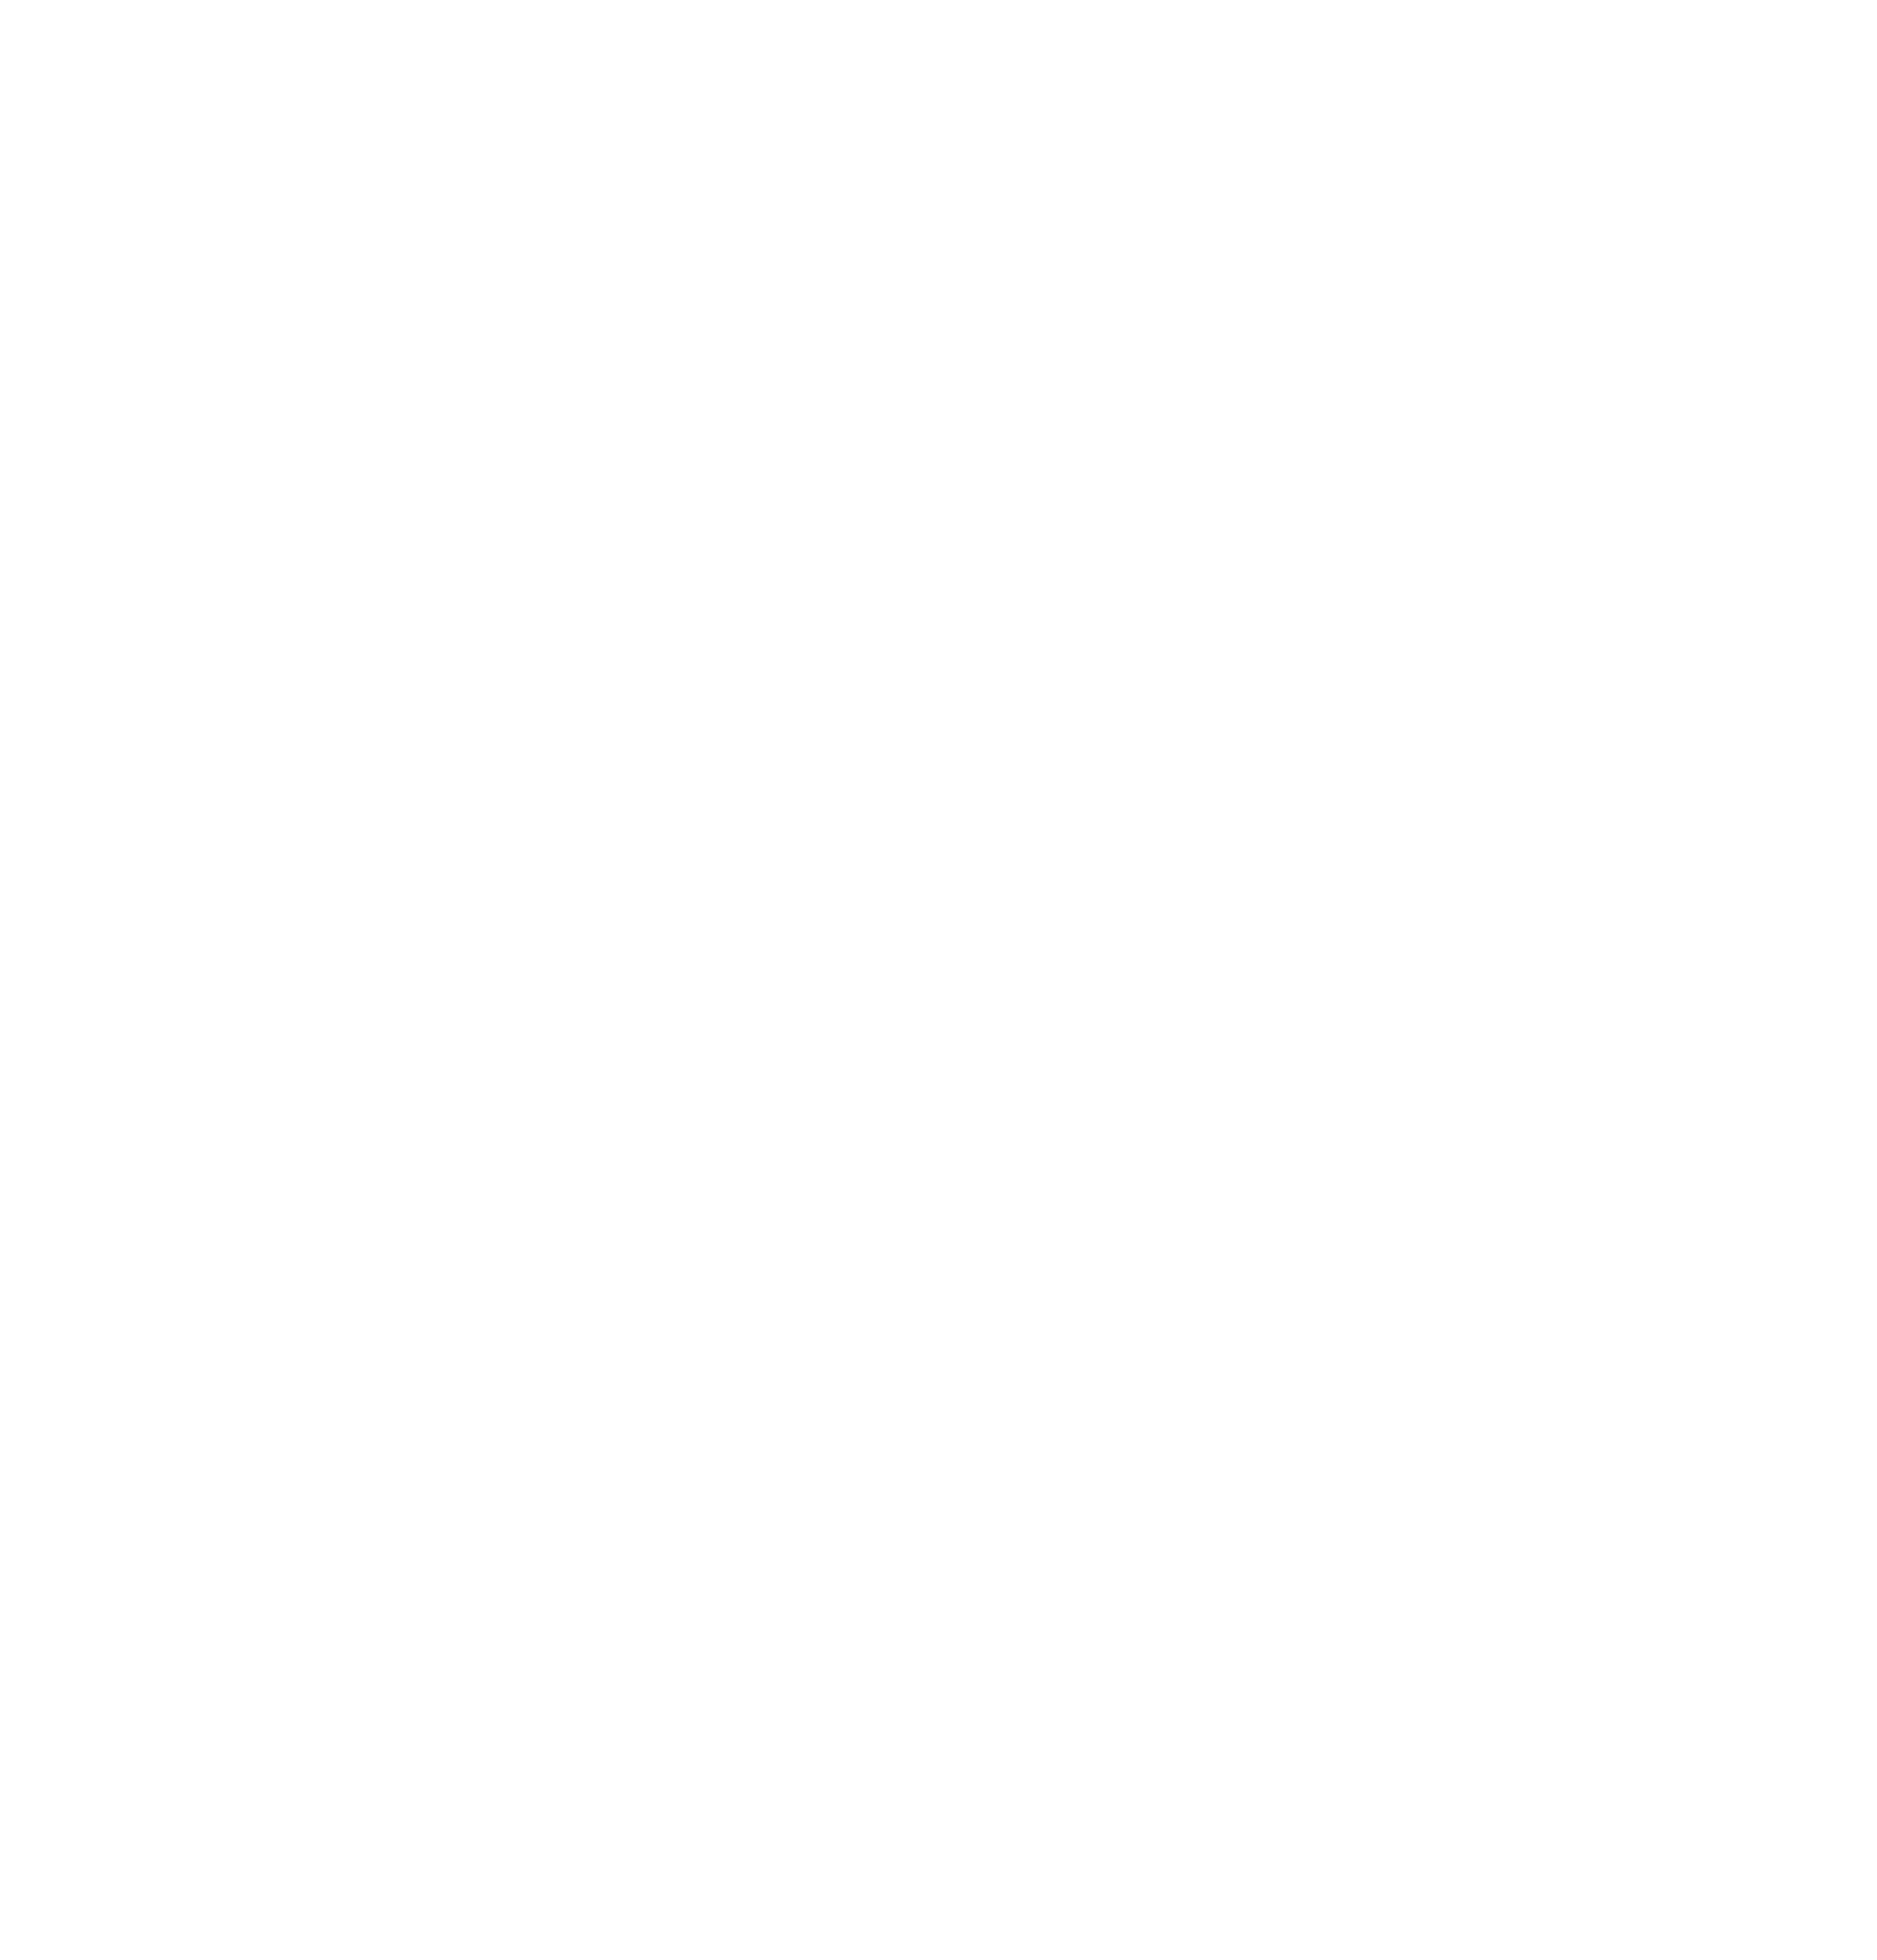 Riverside Micro Race